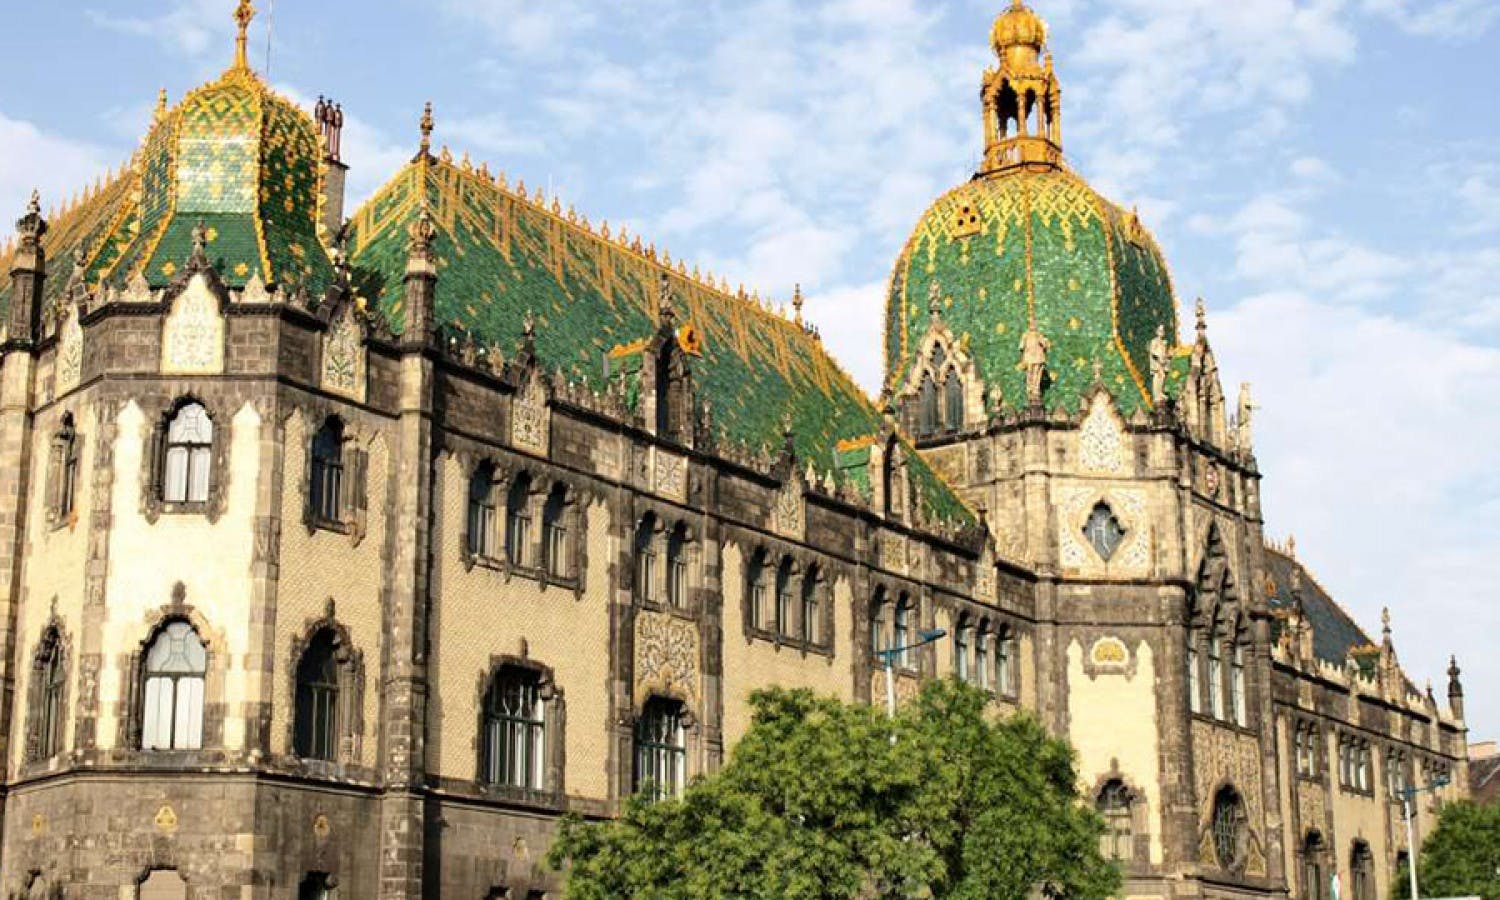 Budapest’s Art Nouveau – 3 hour walk with a historian